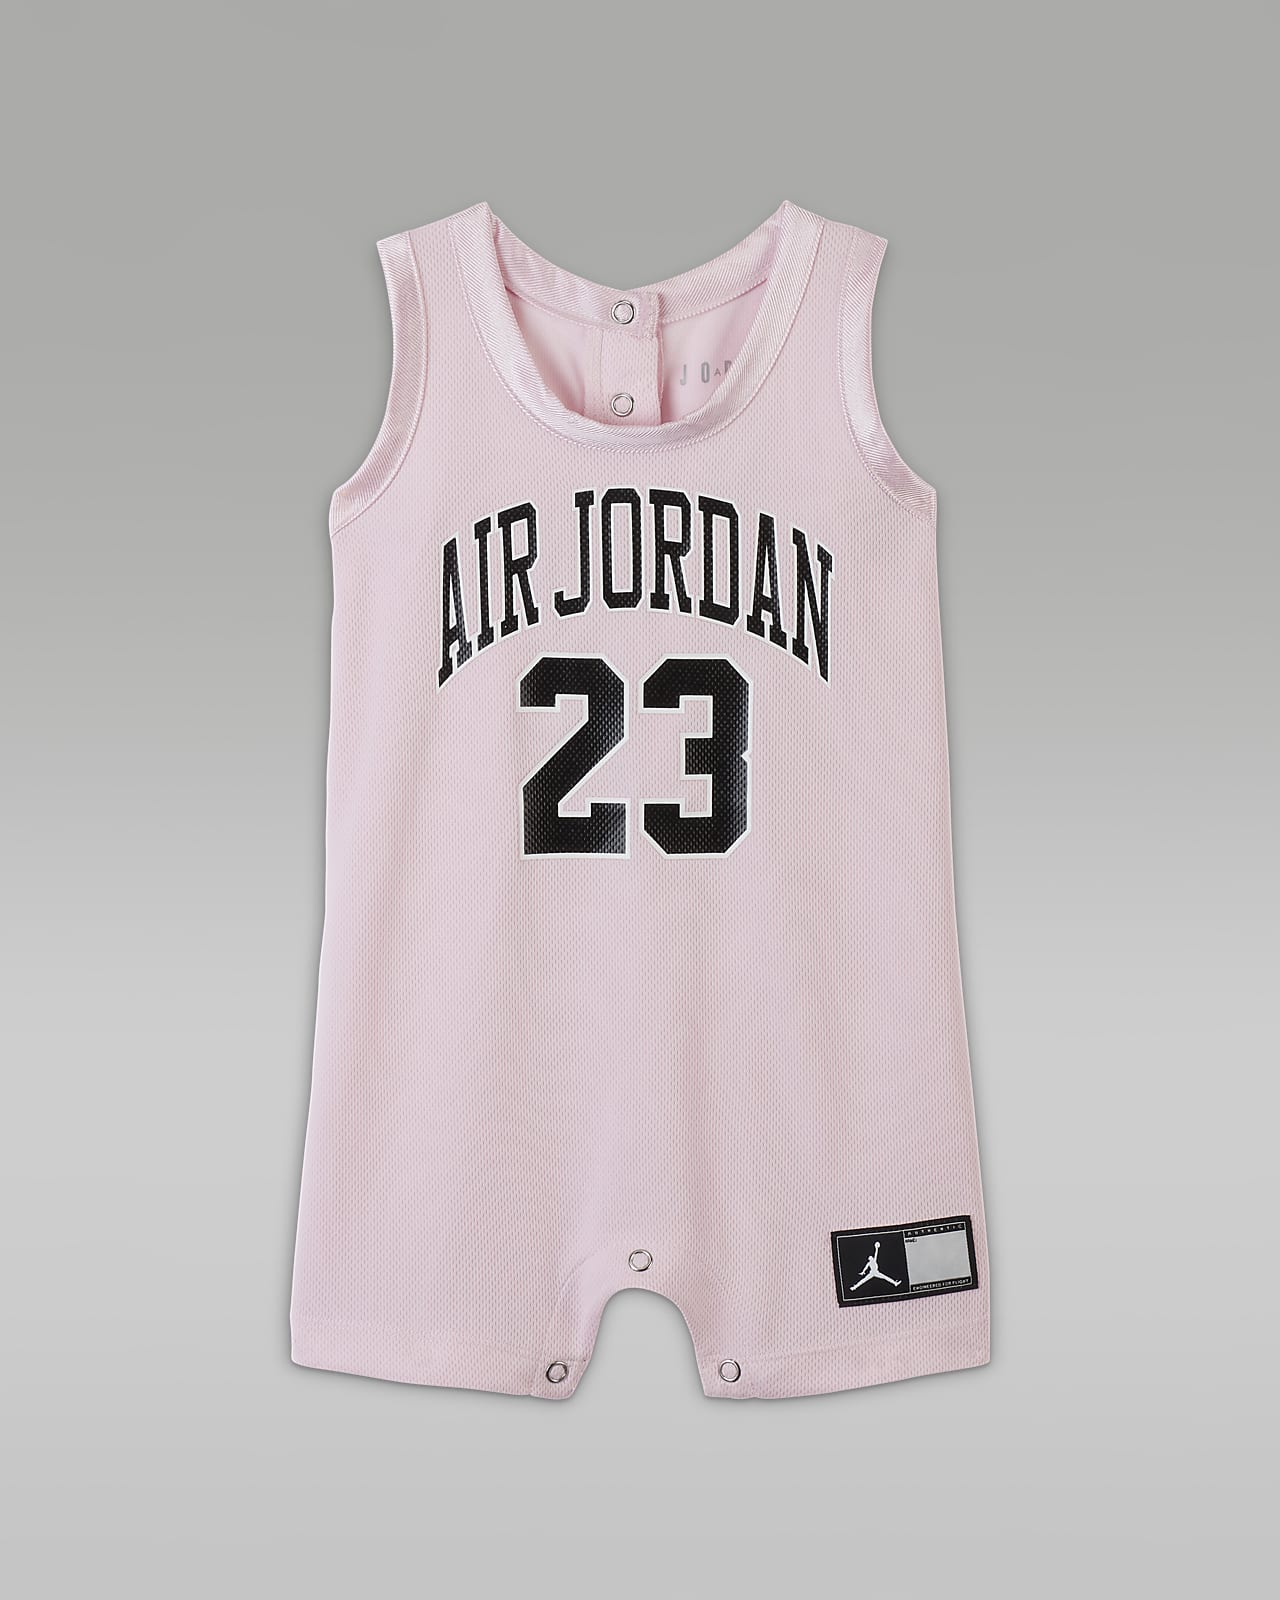 Jordan Baby (12-24M) Jersey Romper